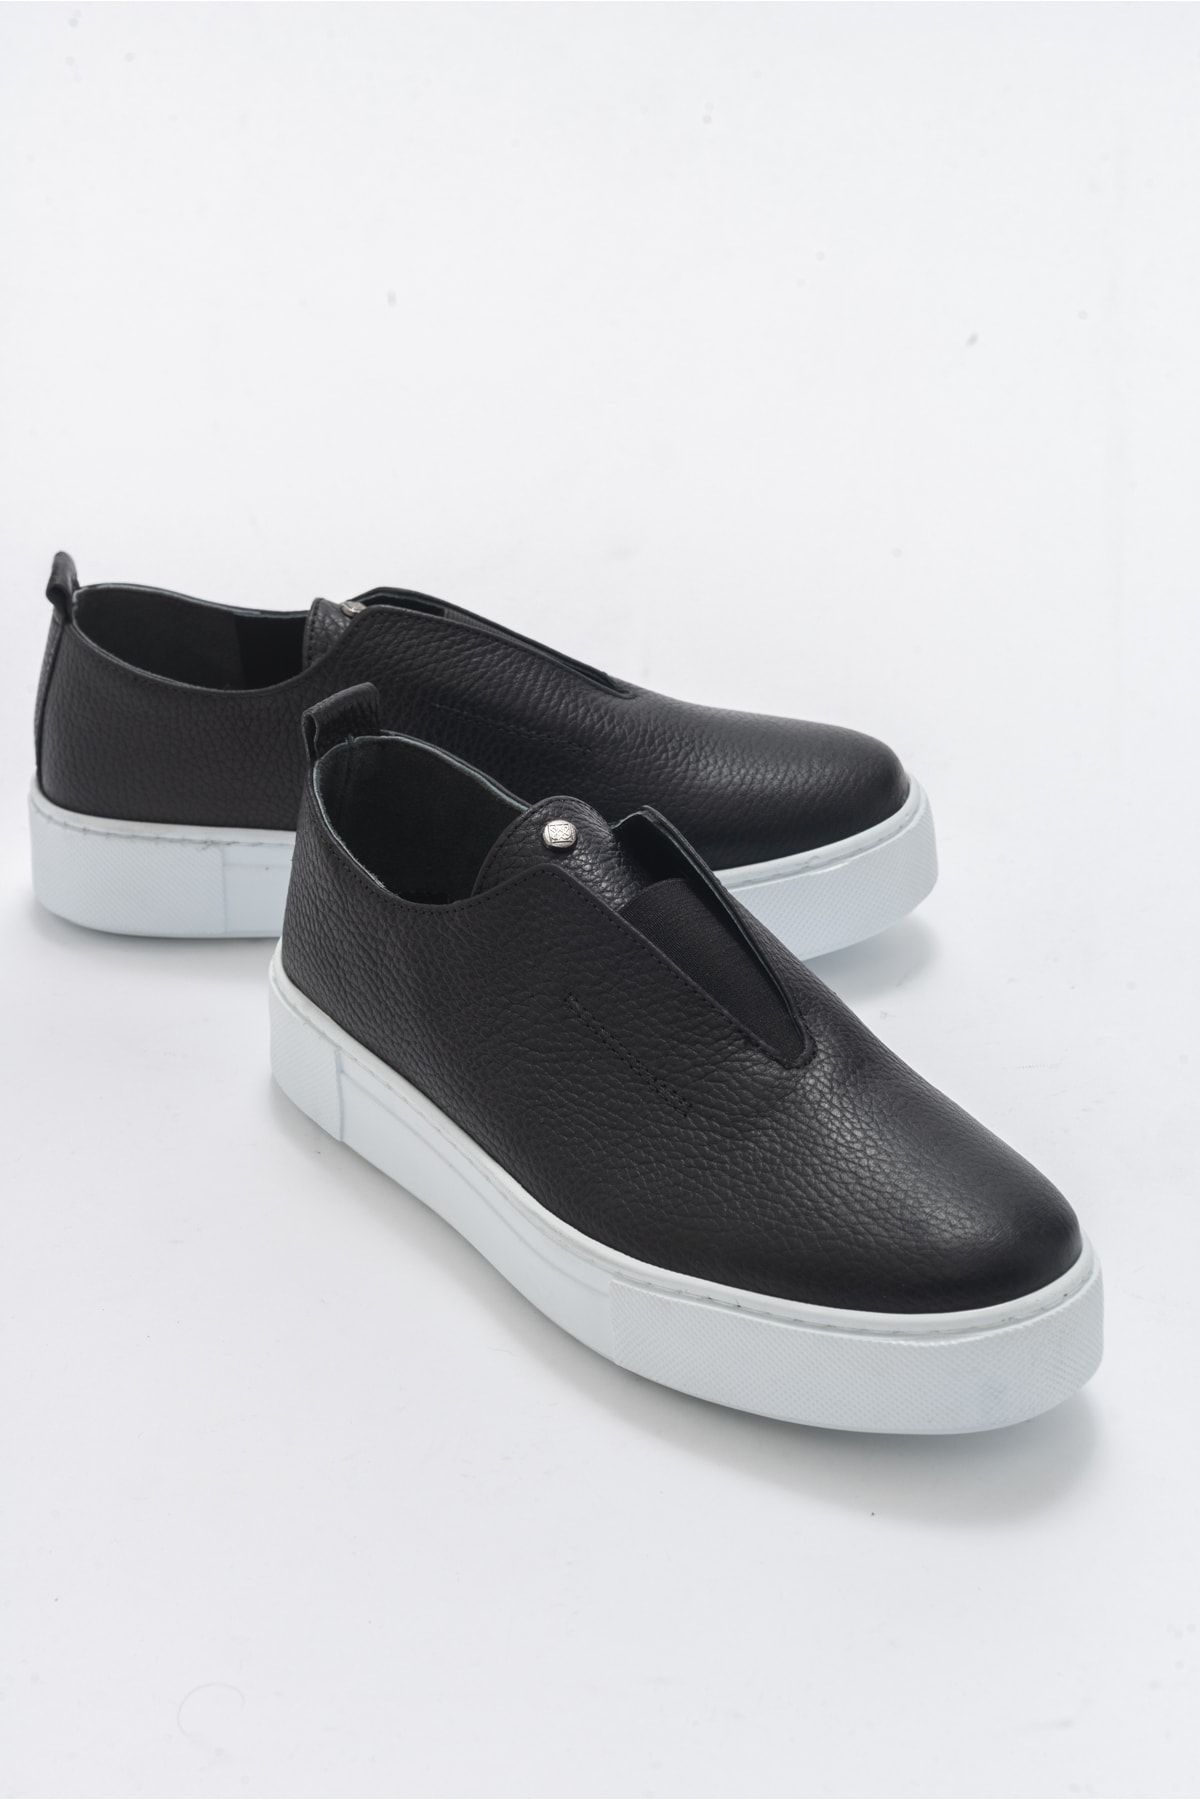 luvishoes Boom Siyah-beyaz Deri Kadın Sneakers